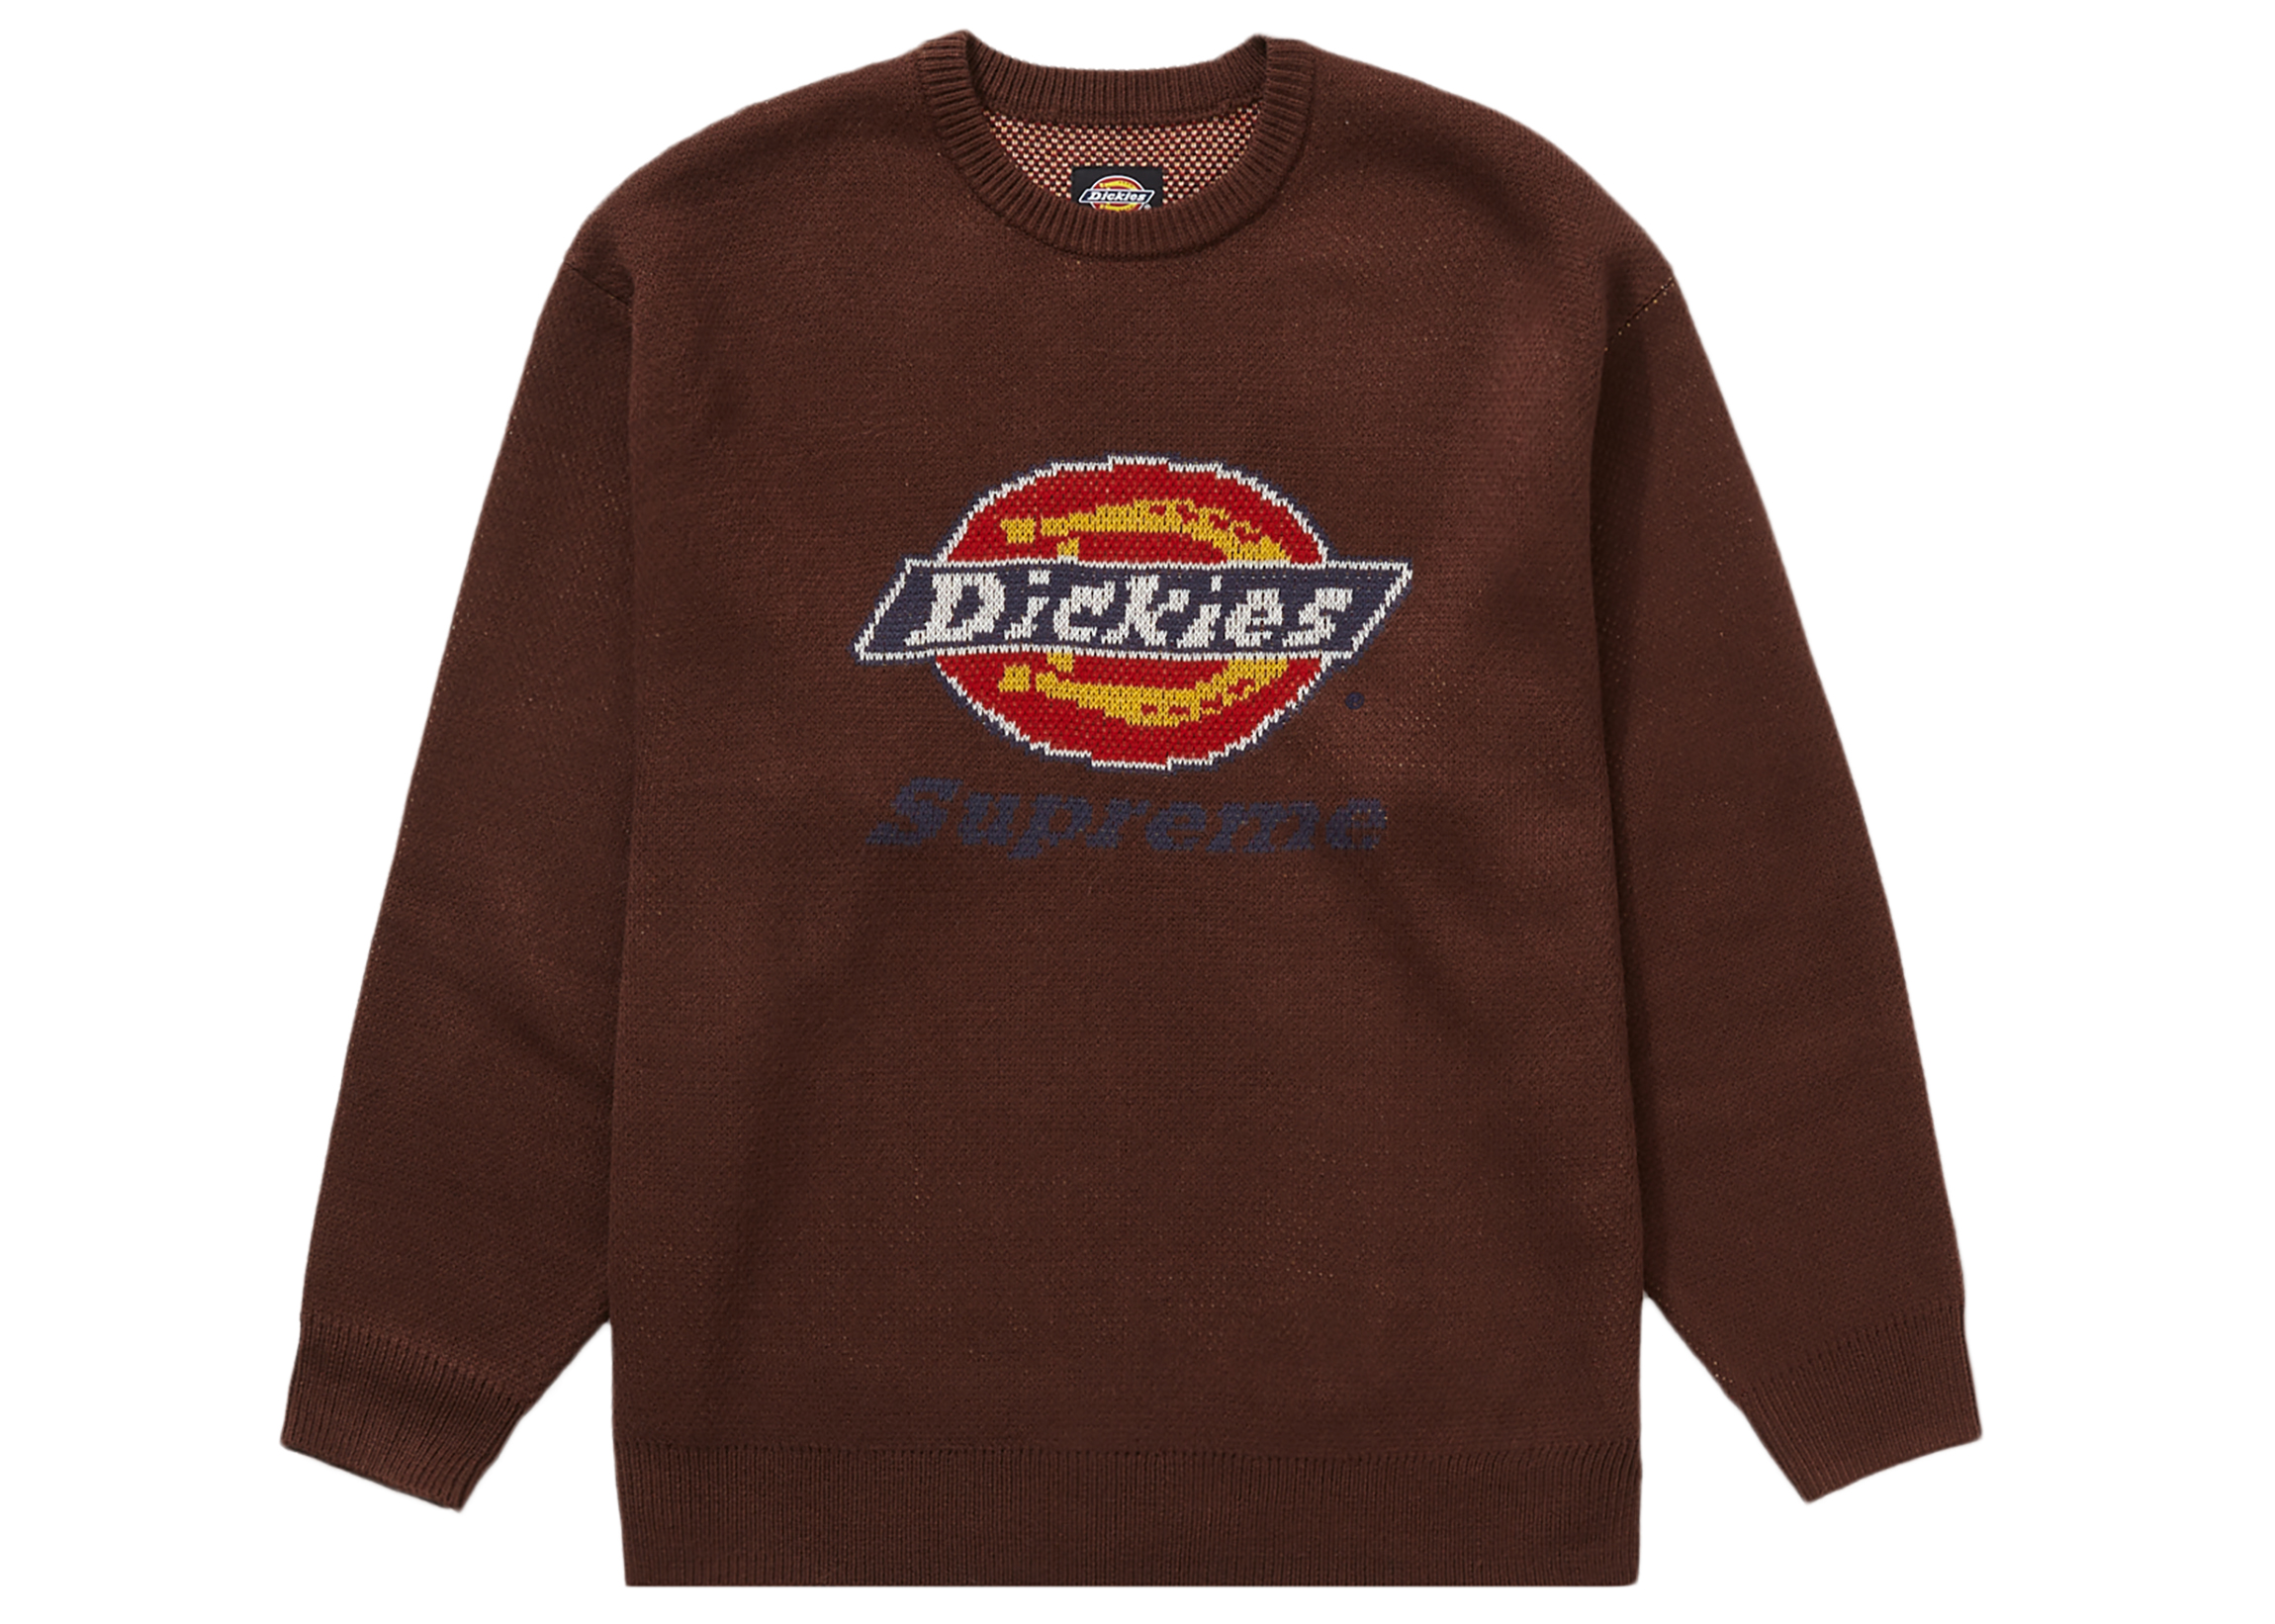 Supreme  Dickies Sweater